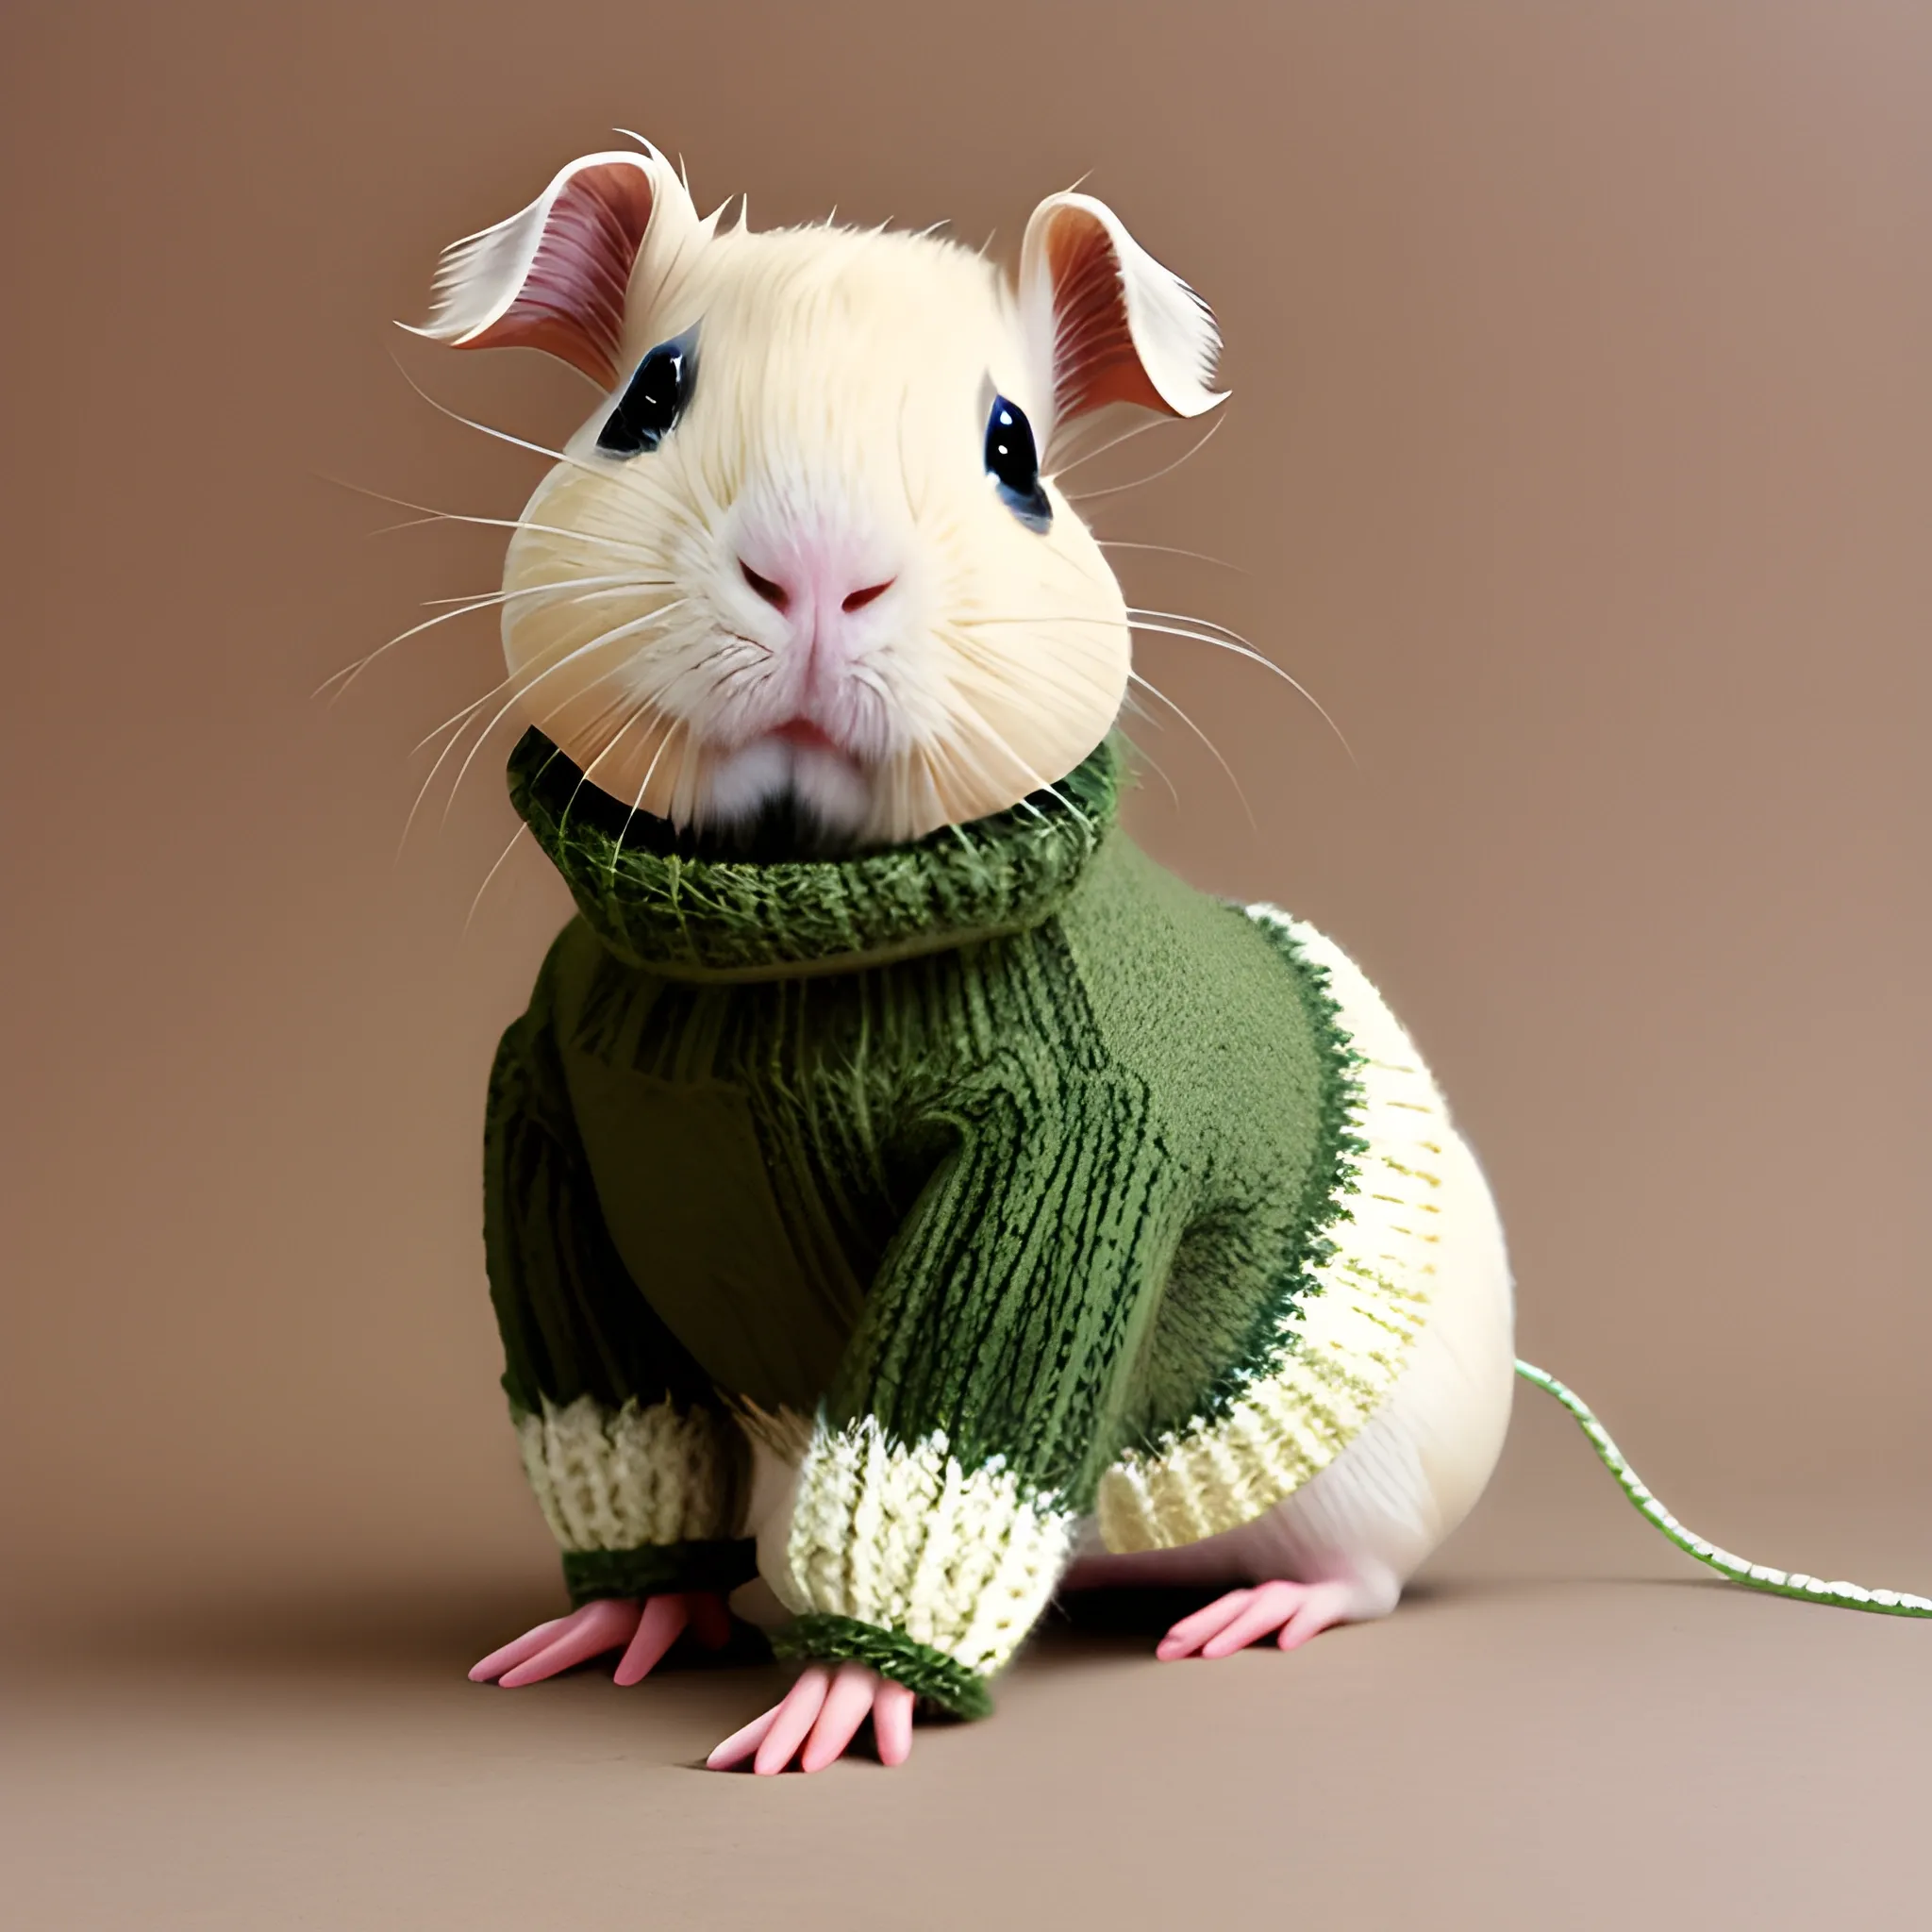 knitting pattern of beige guinea pig on green knit sweater

